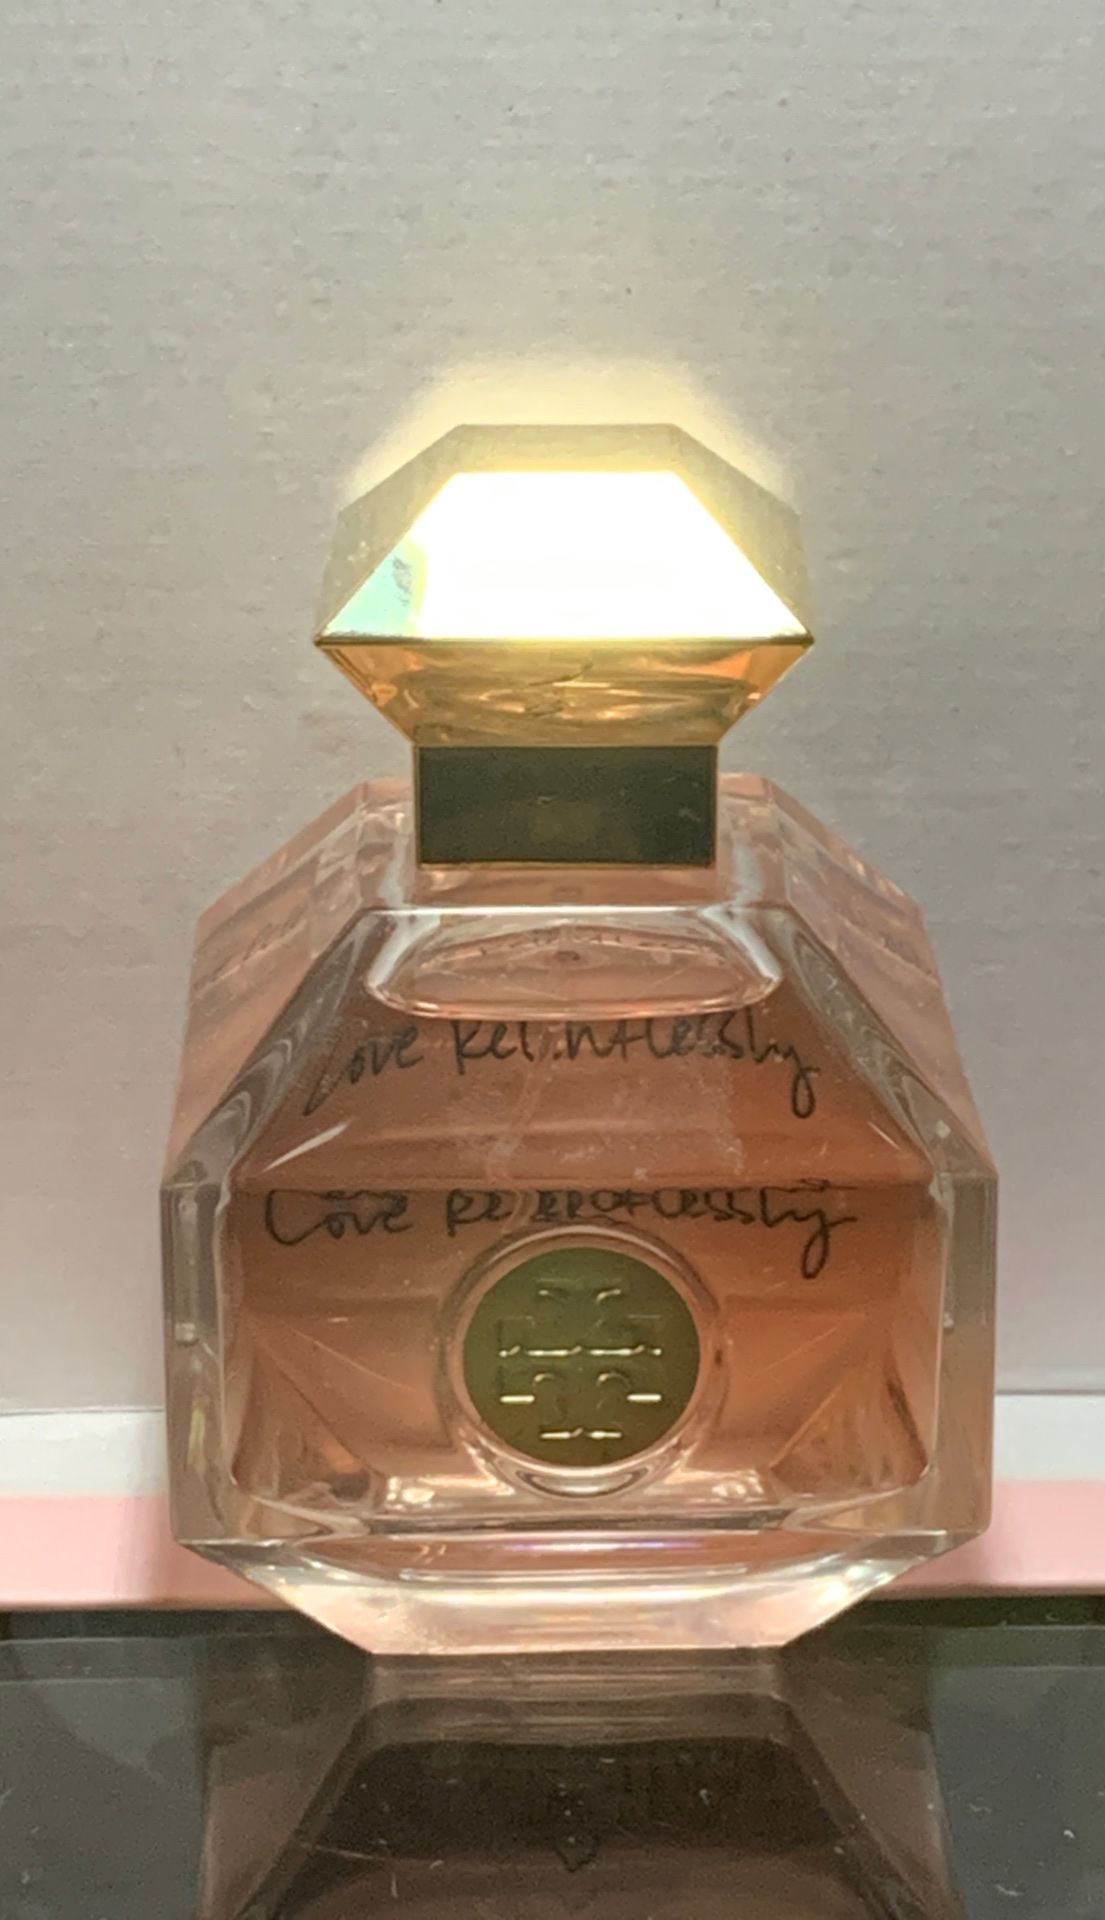 Tory Burch love relentlessly 3.4 oz perfume